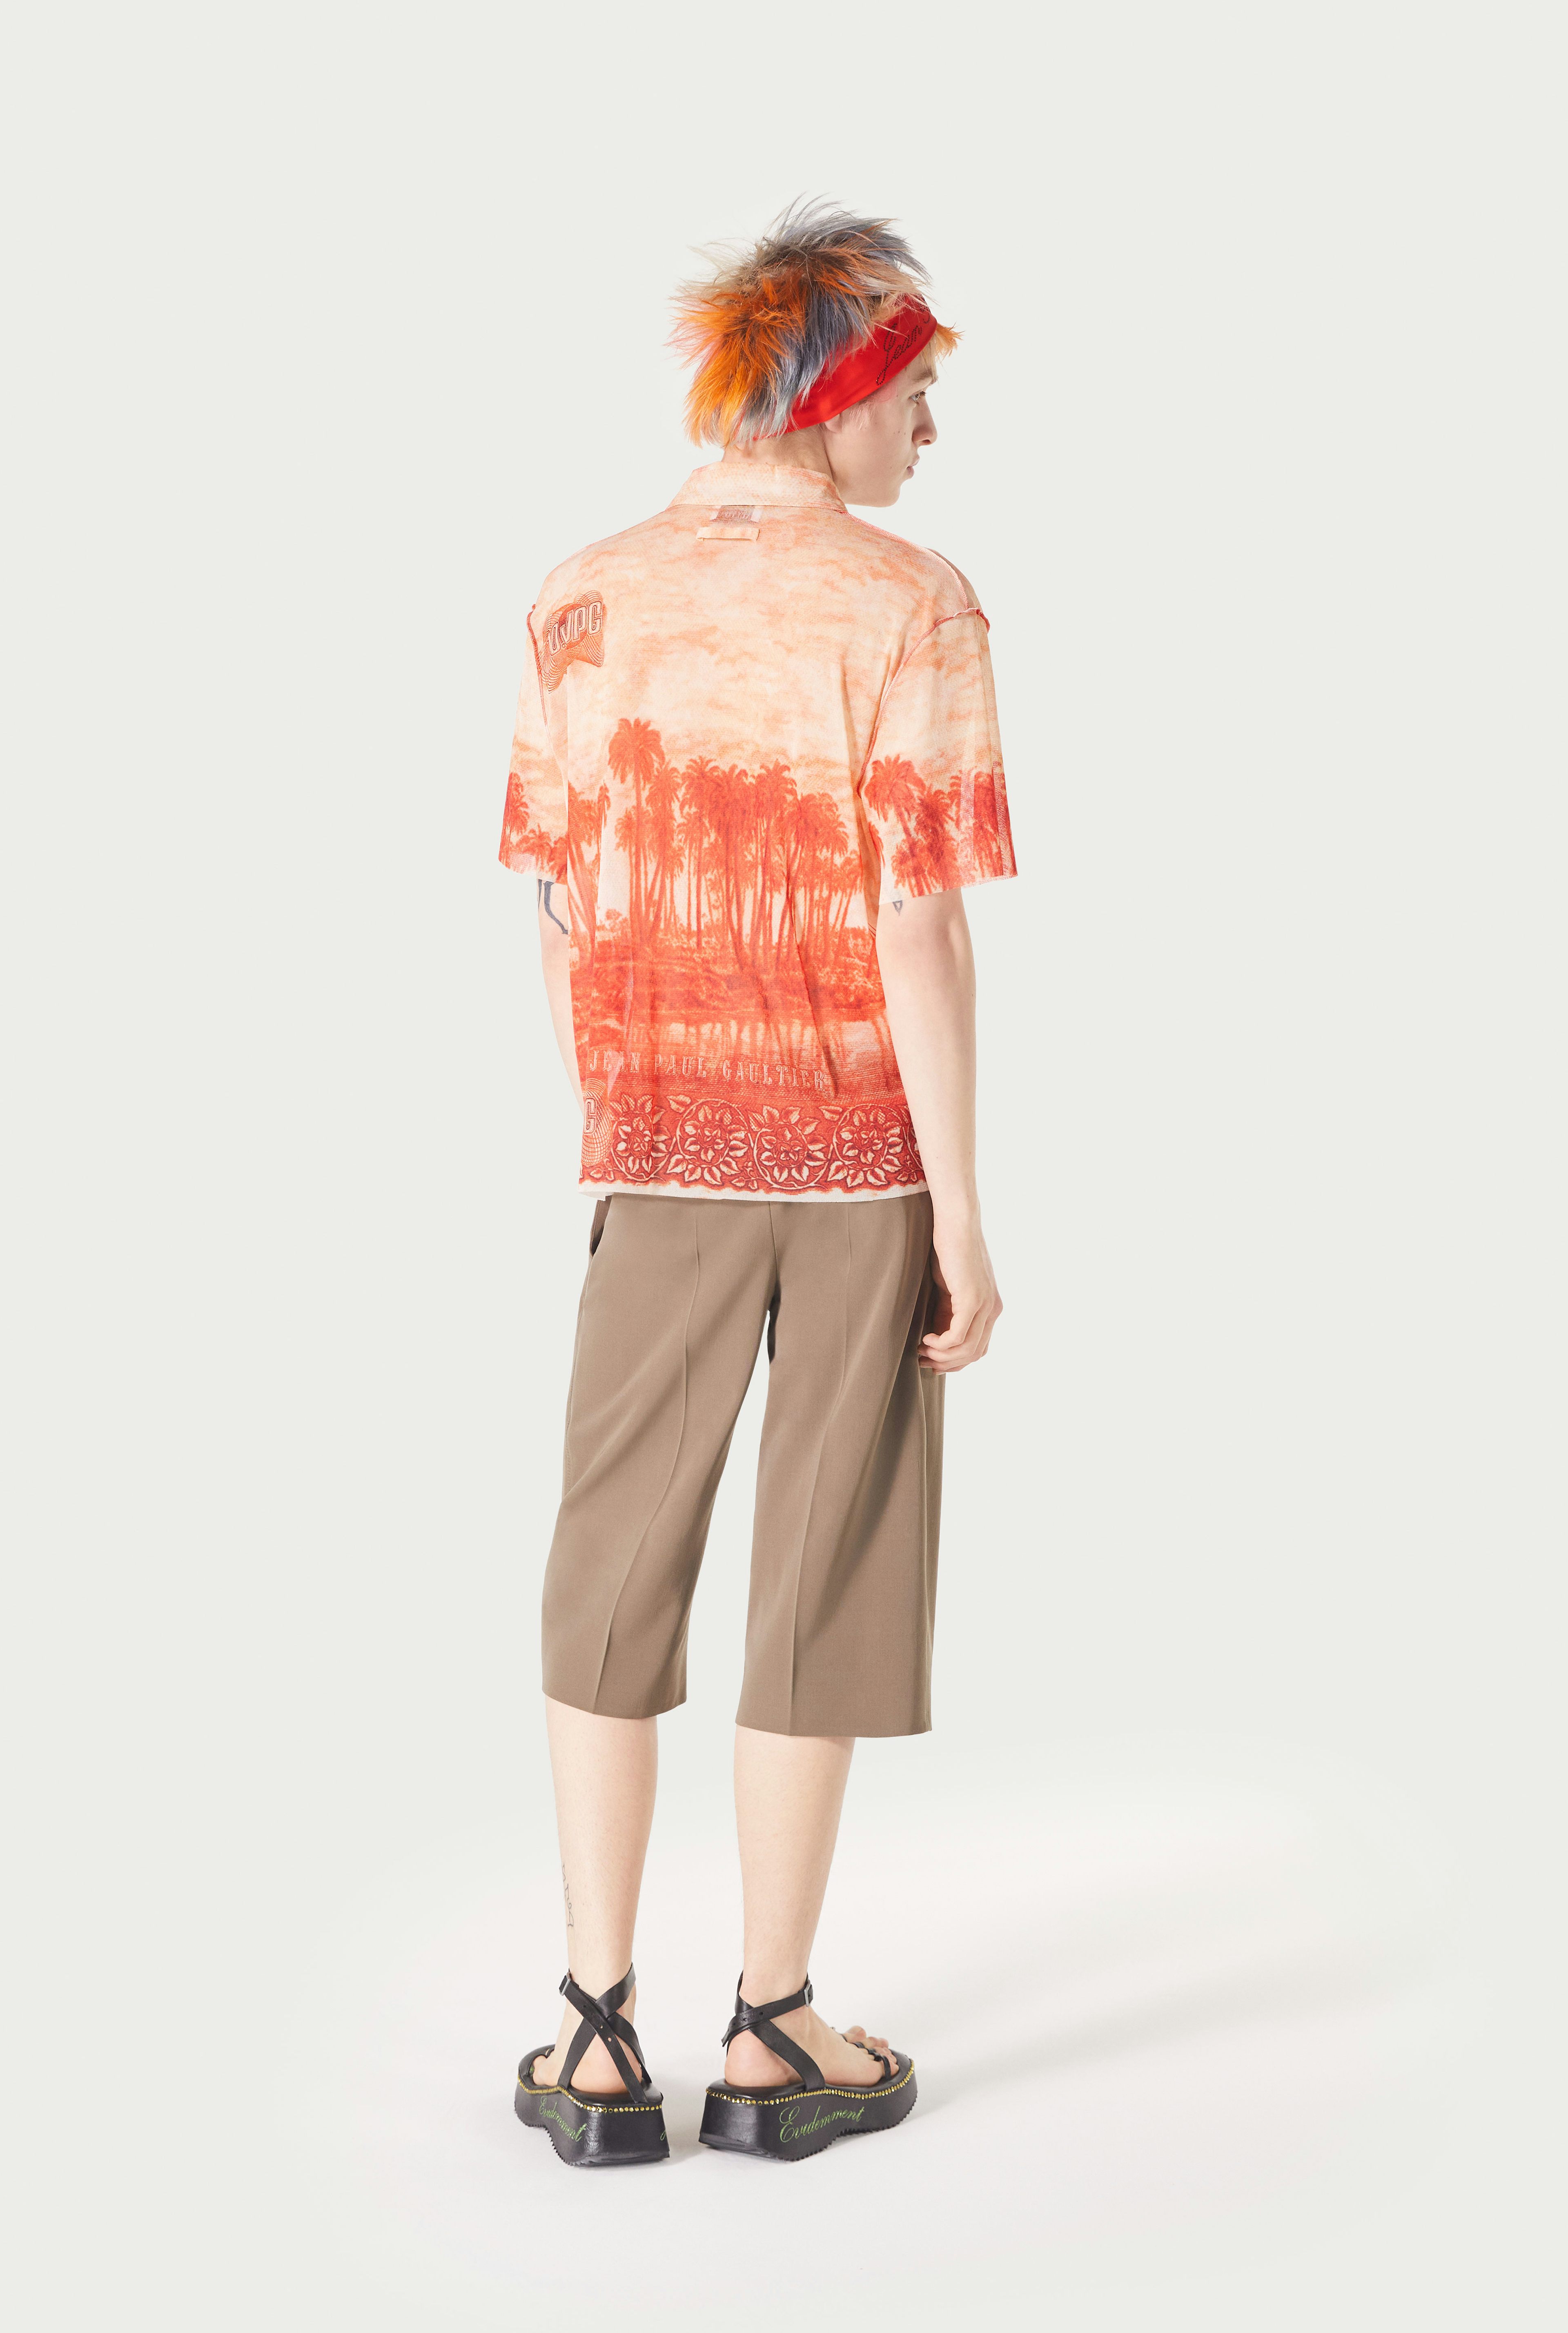 The Palm Tree Summer Shirt